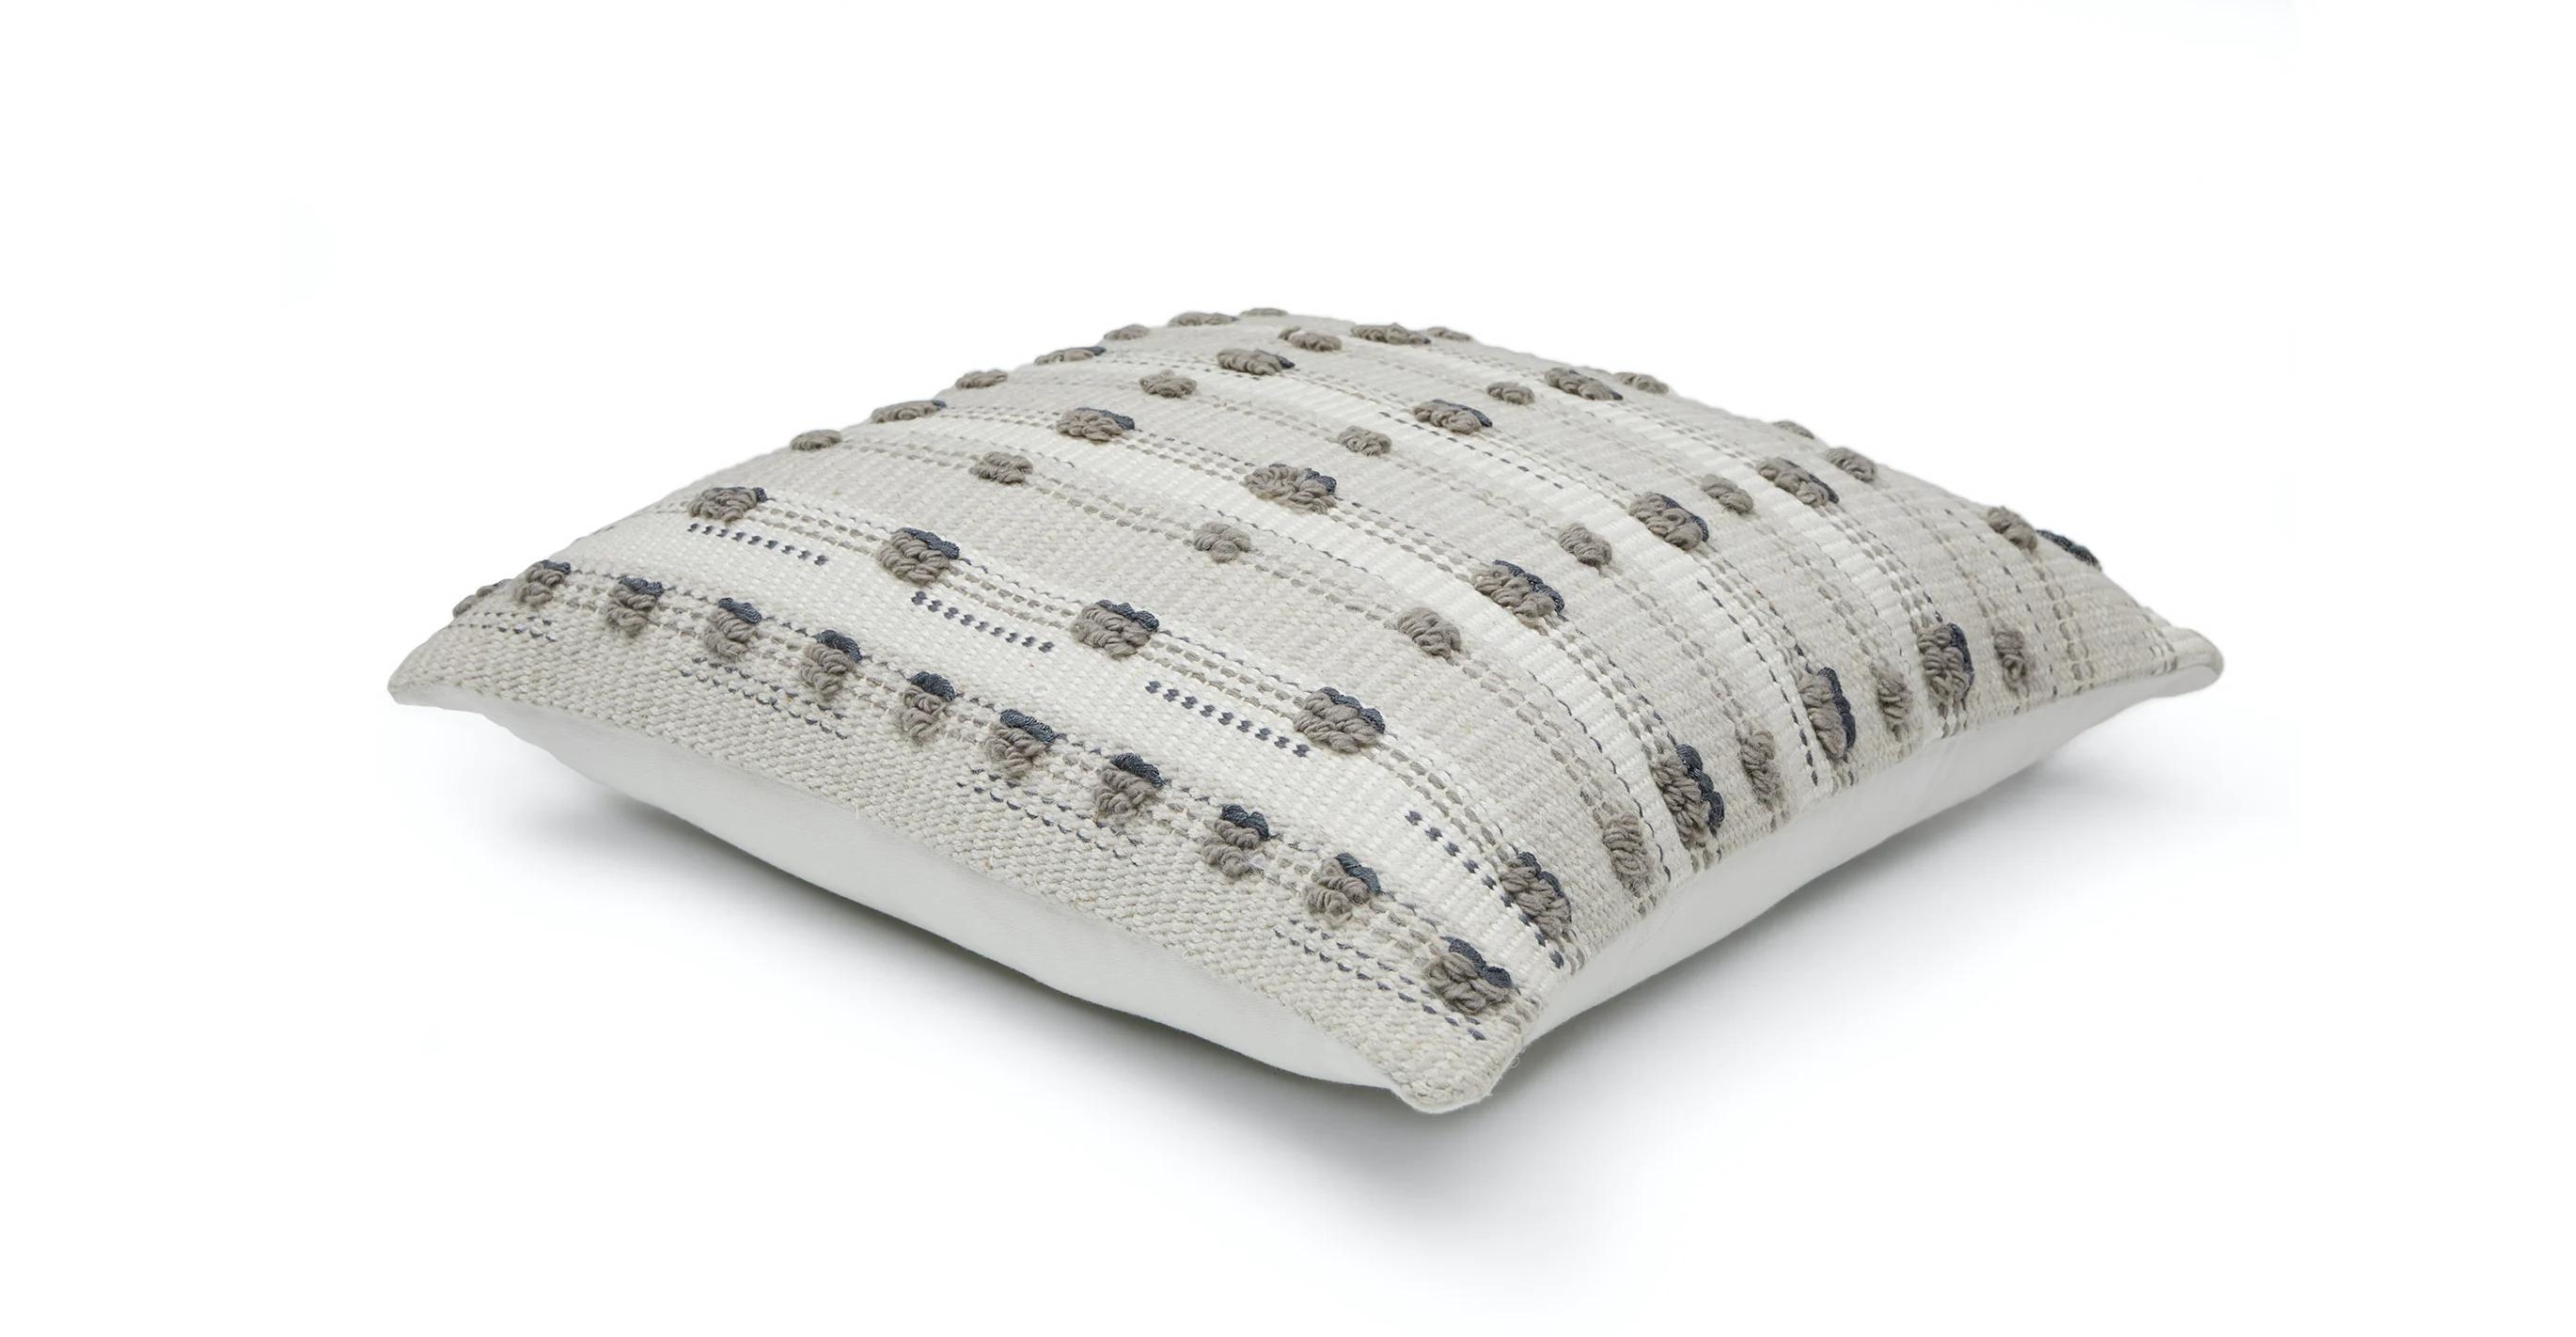 Jema Gainsboro Gray Pillow - Image 2